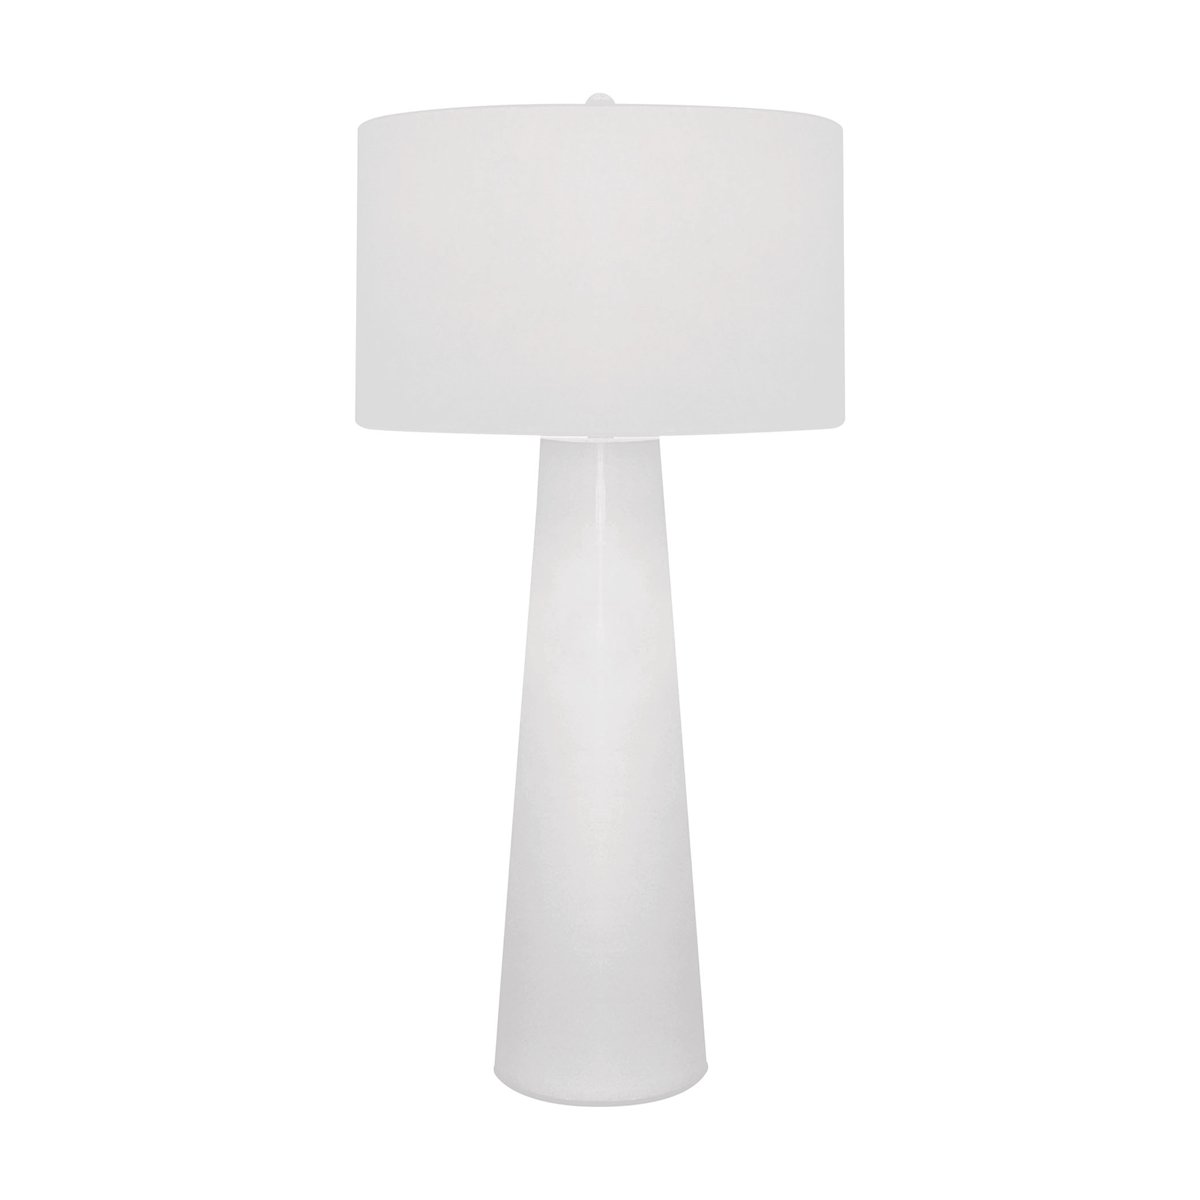 White Obelisk Table Lamp With Night Light Lamps Dimond Lighting 